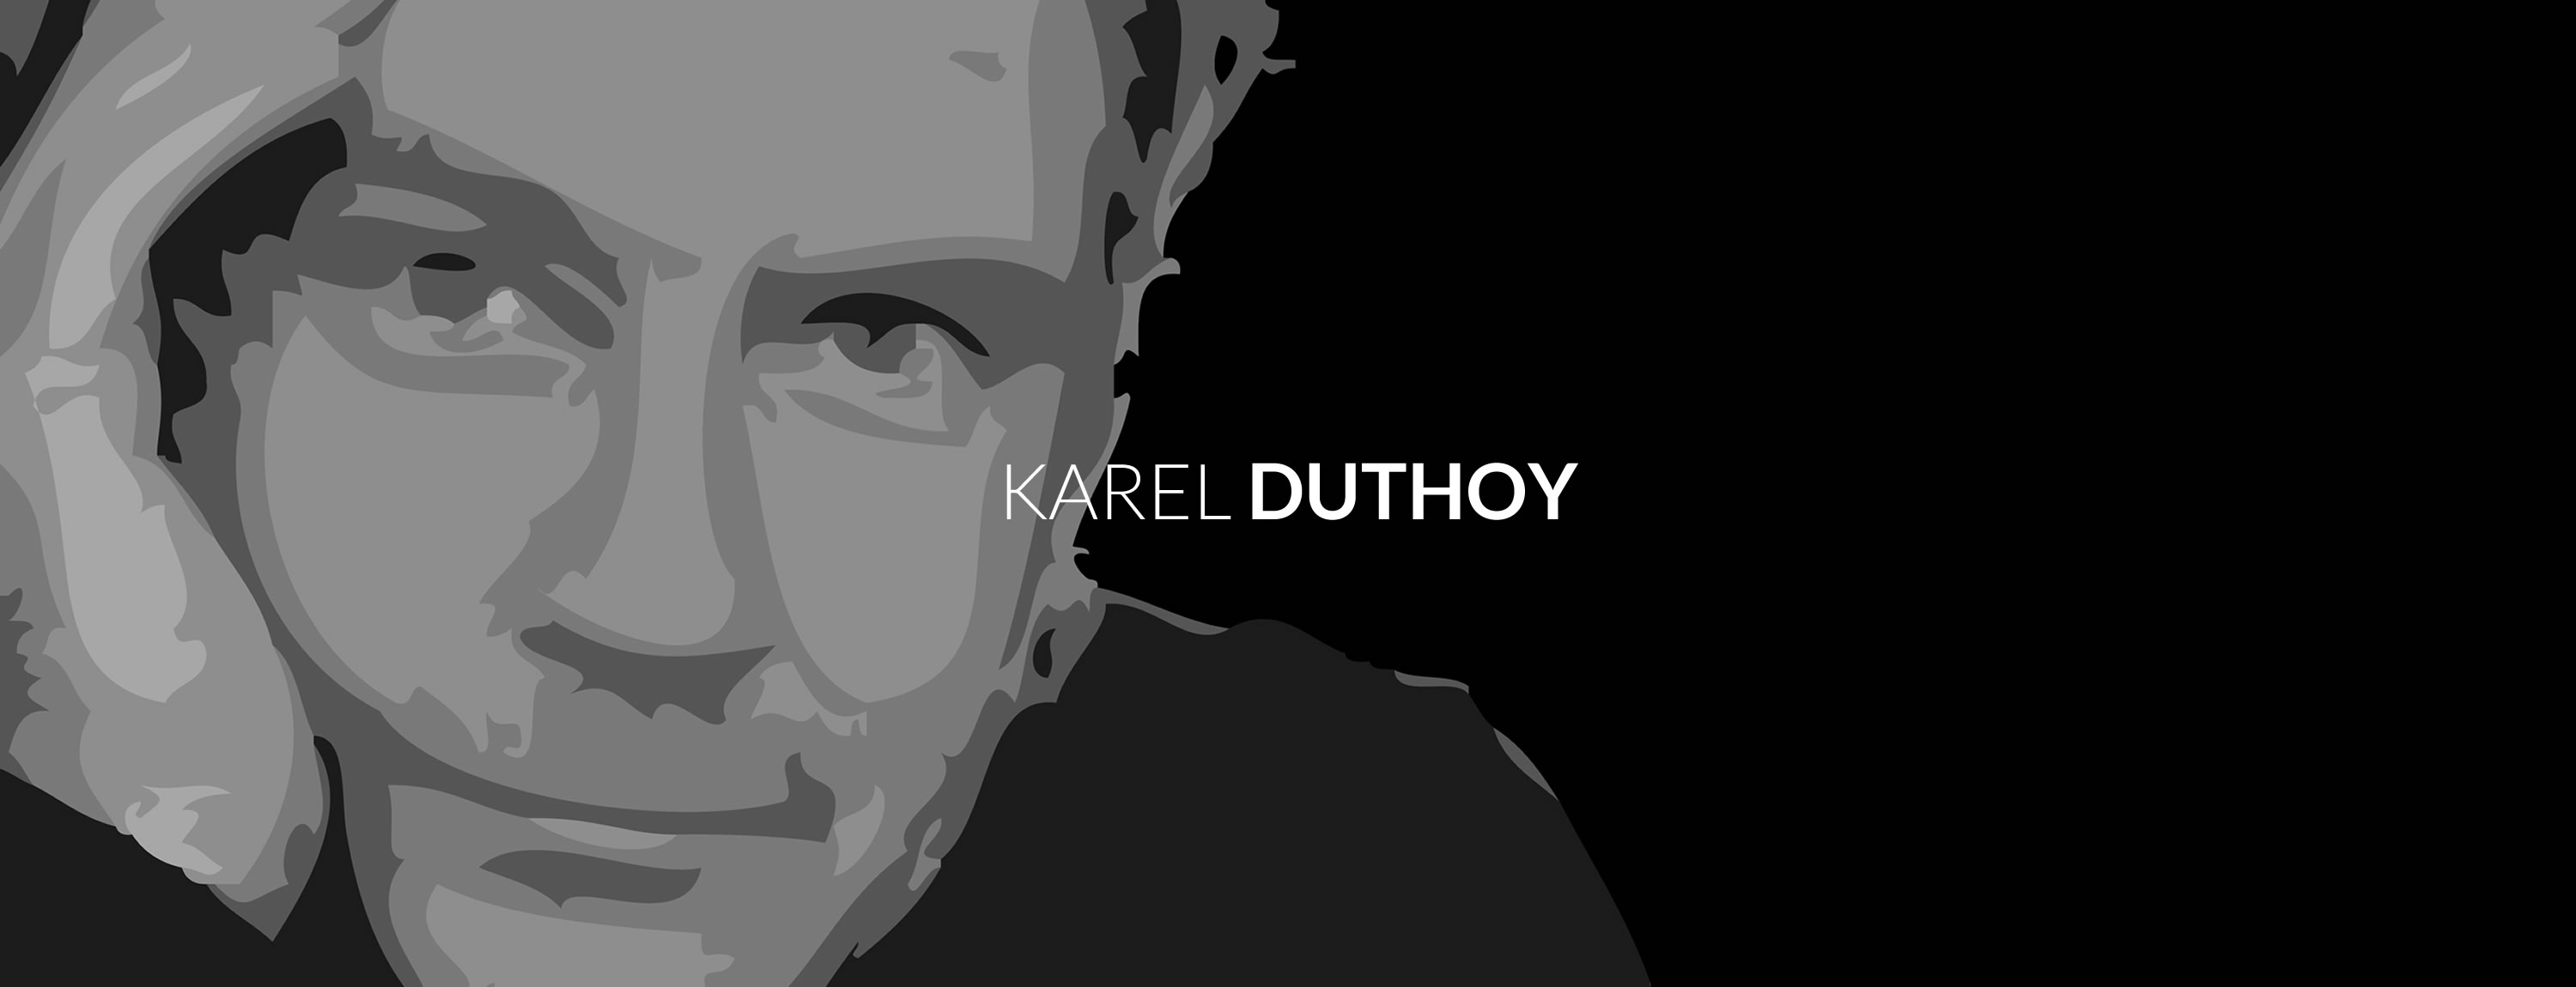 KAREL DUTHOY